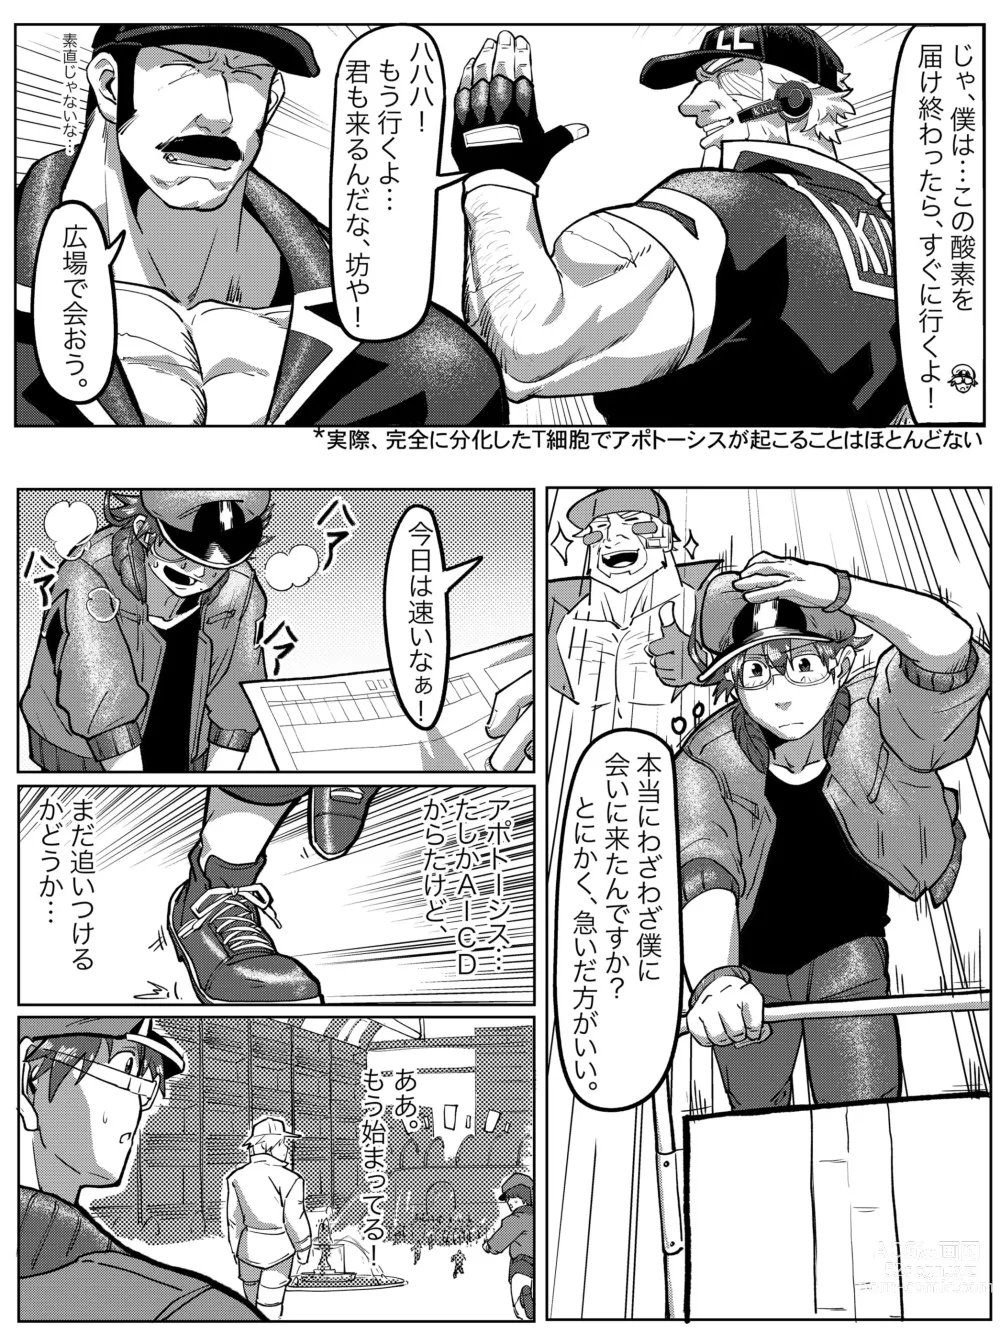 Page 8 of doujinshi BEHEAD